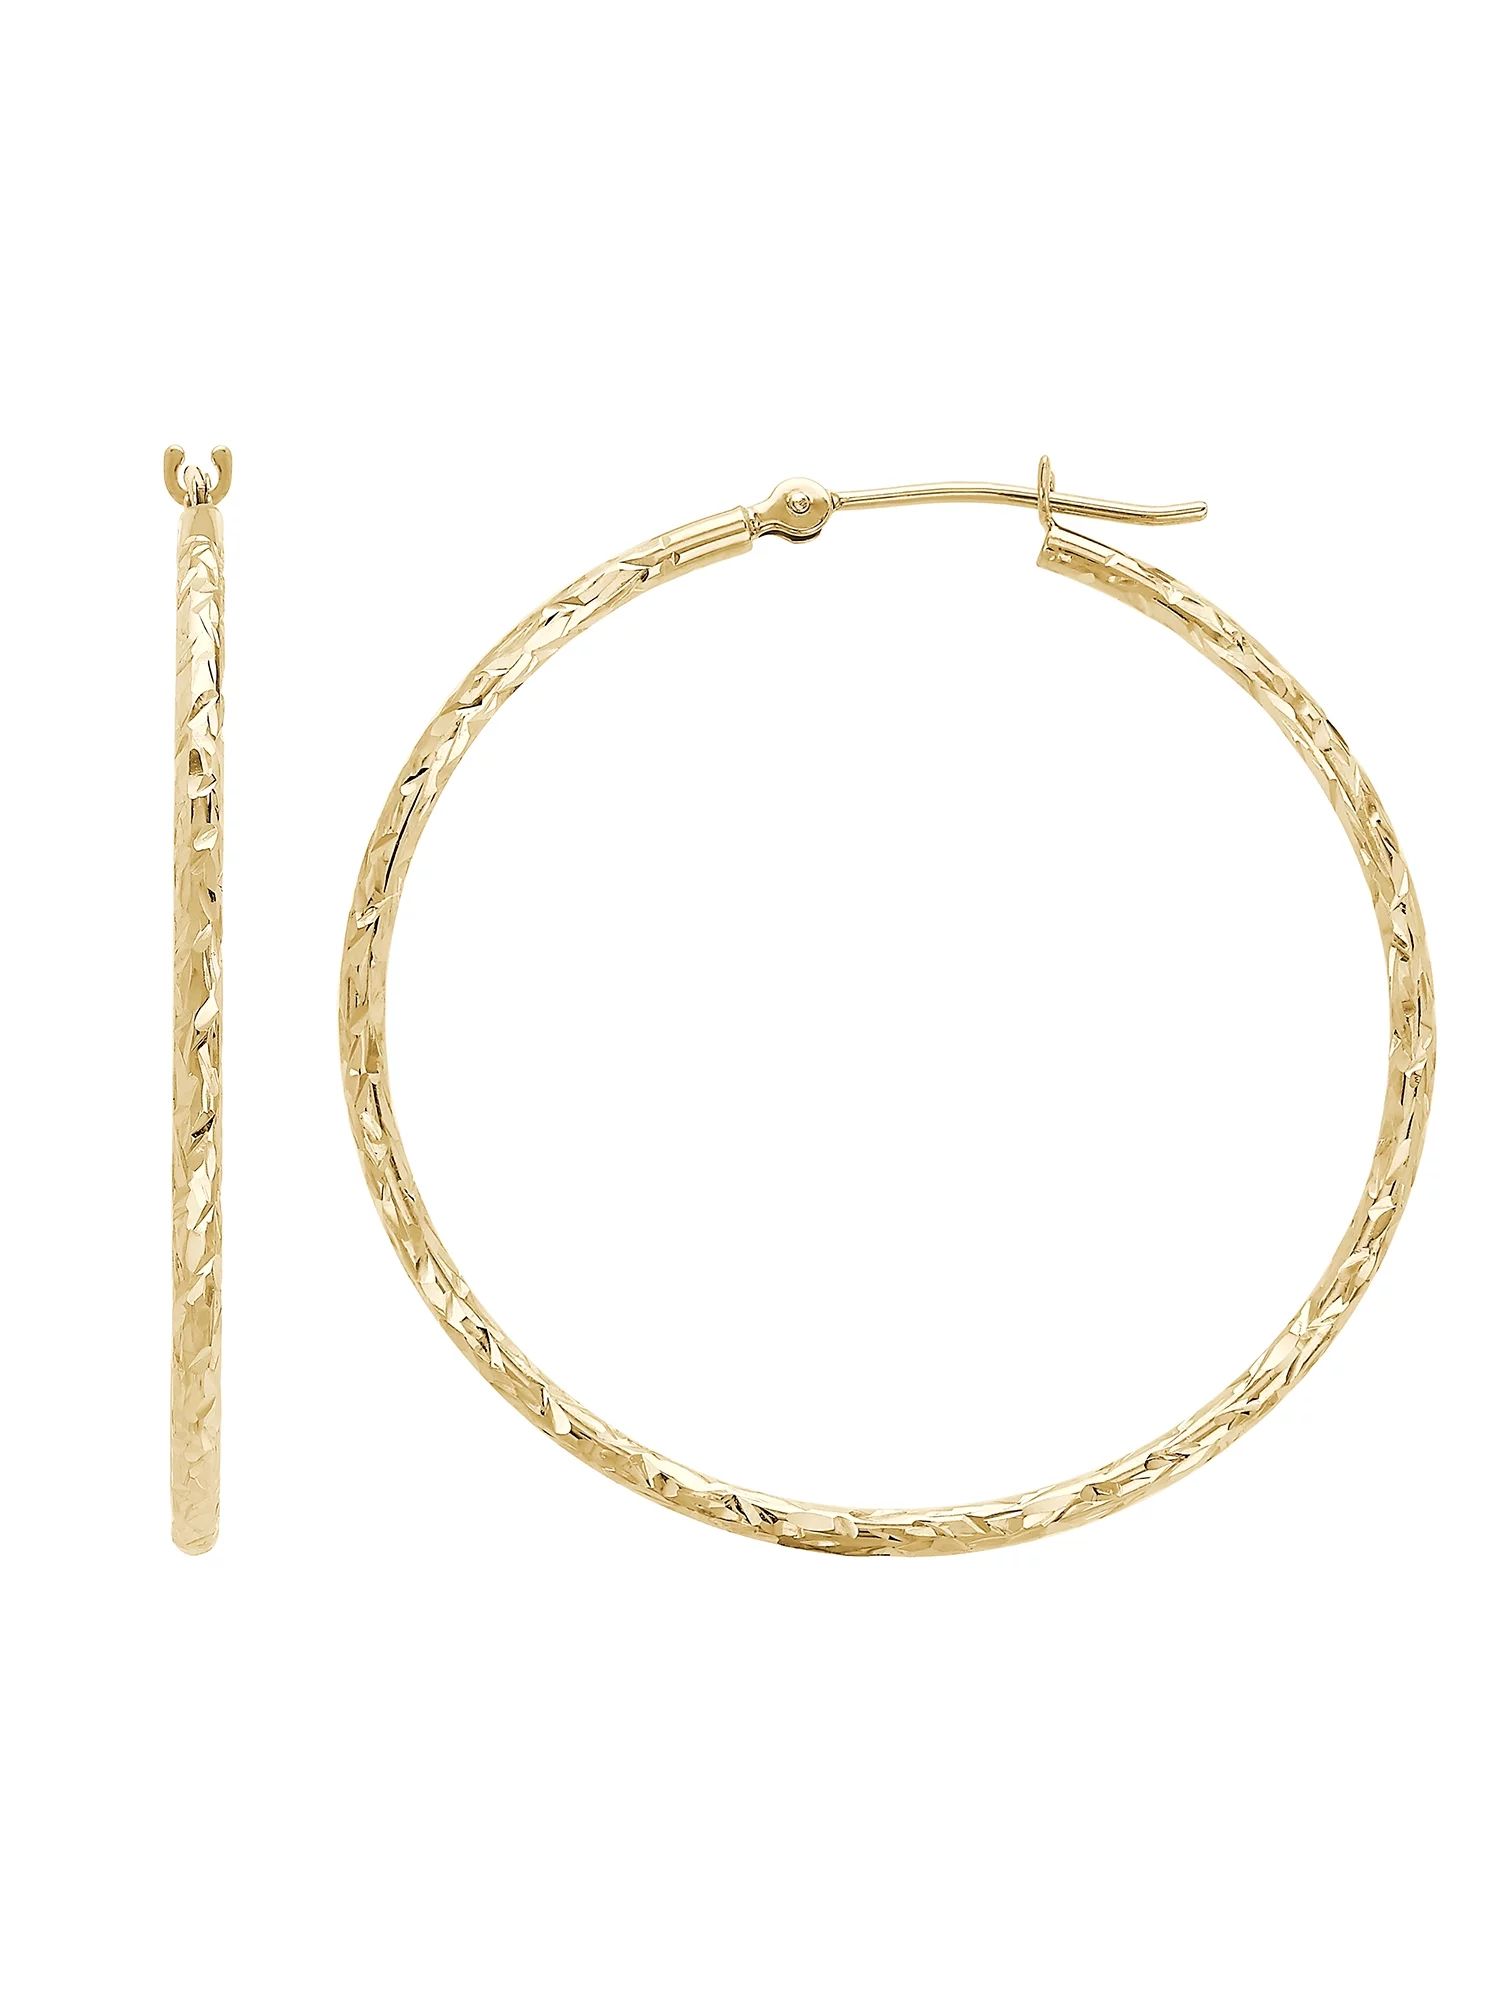 Brilliance Fine Jewelry 10K Yellow Gold 1.52MM x 35MM Hollow Round Diamond-Cut Hoops Earrings | Walmart (US)